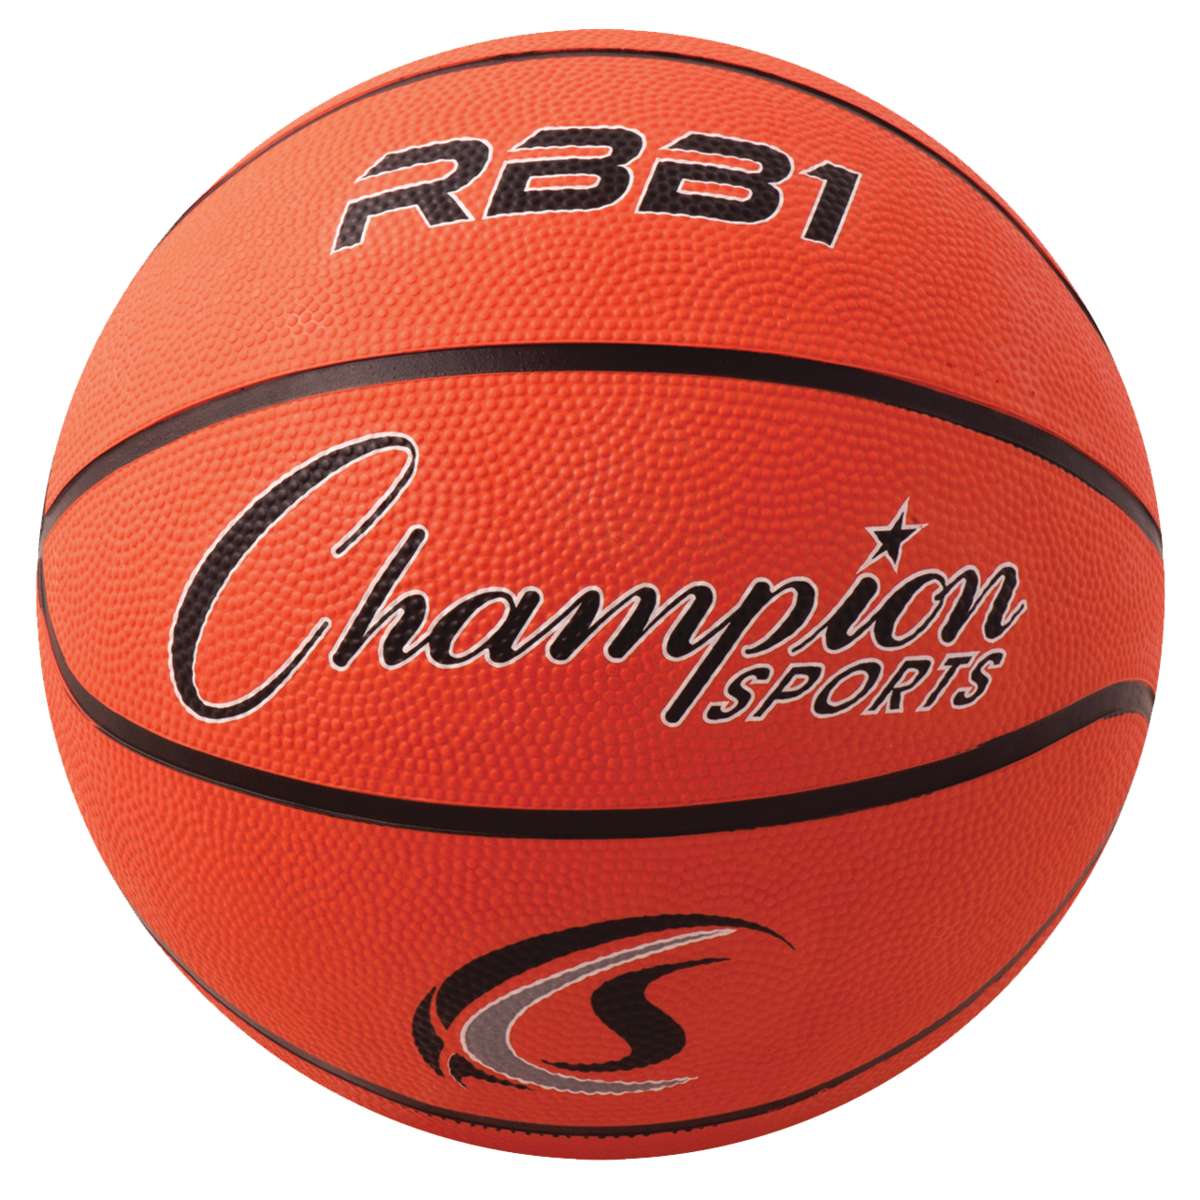 Basketball, Official size & weight CHSRBB1